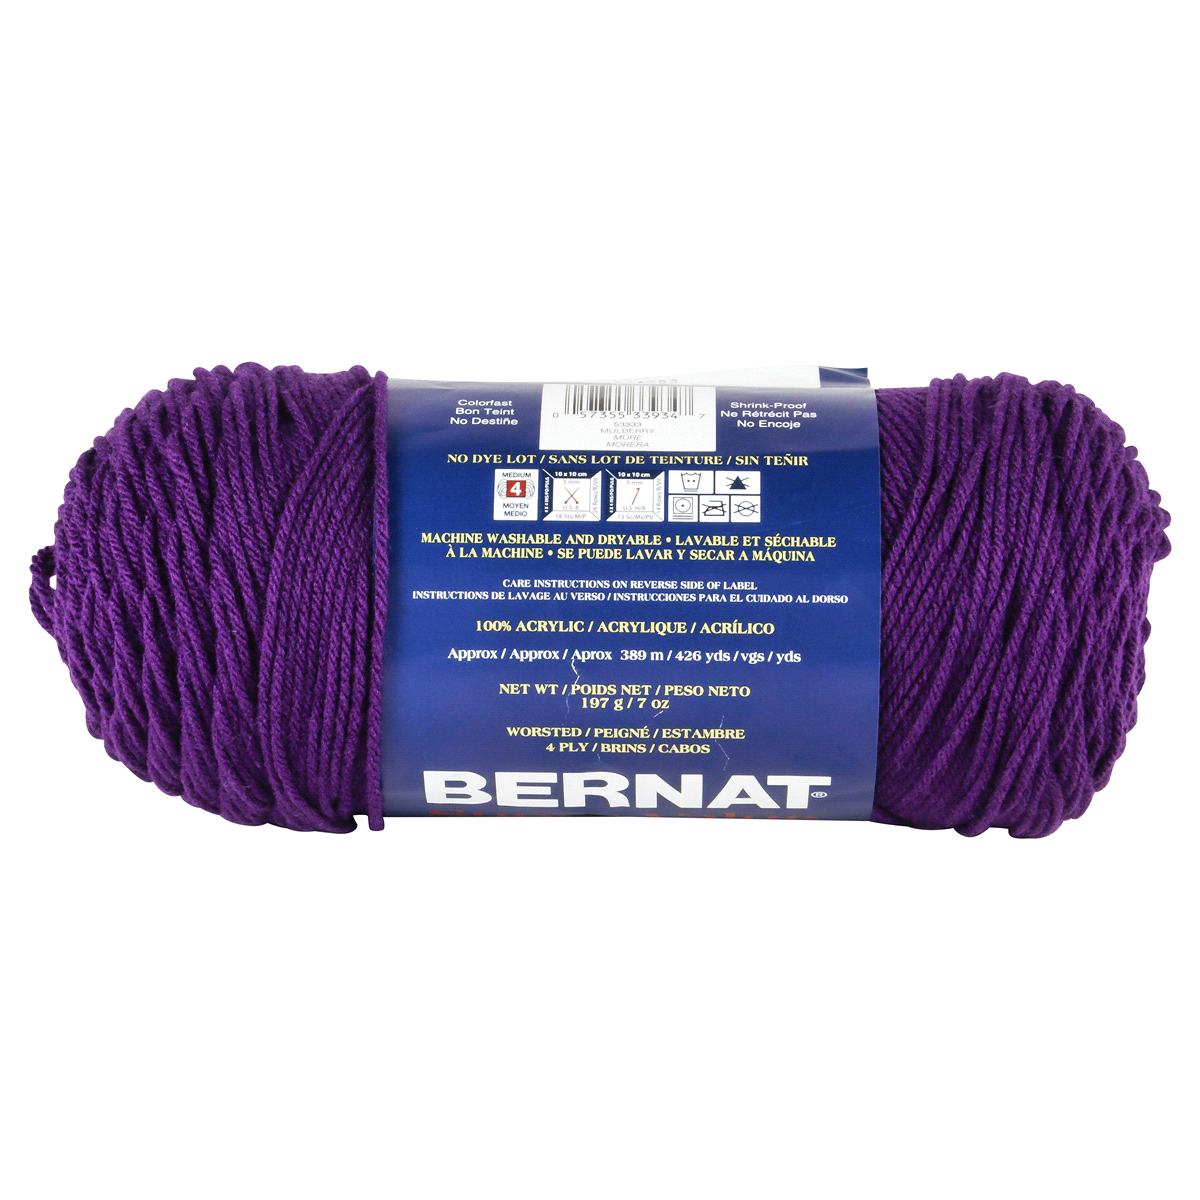 Bernat Super Value Yarn - Mulberry 1 ct